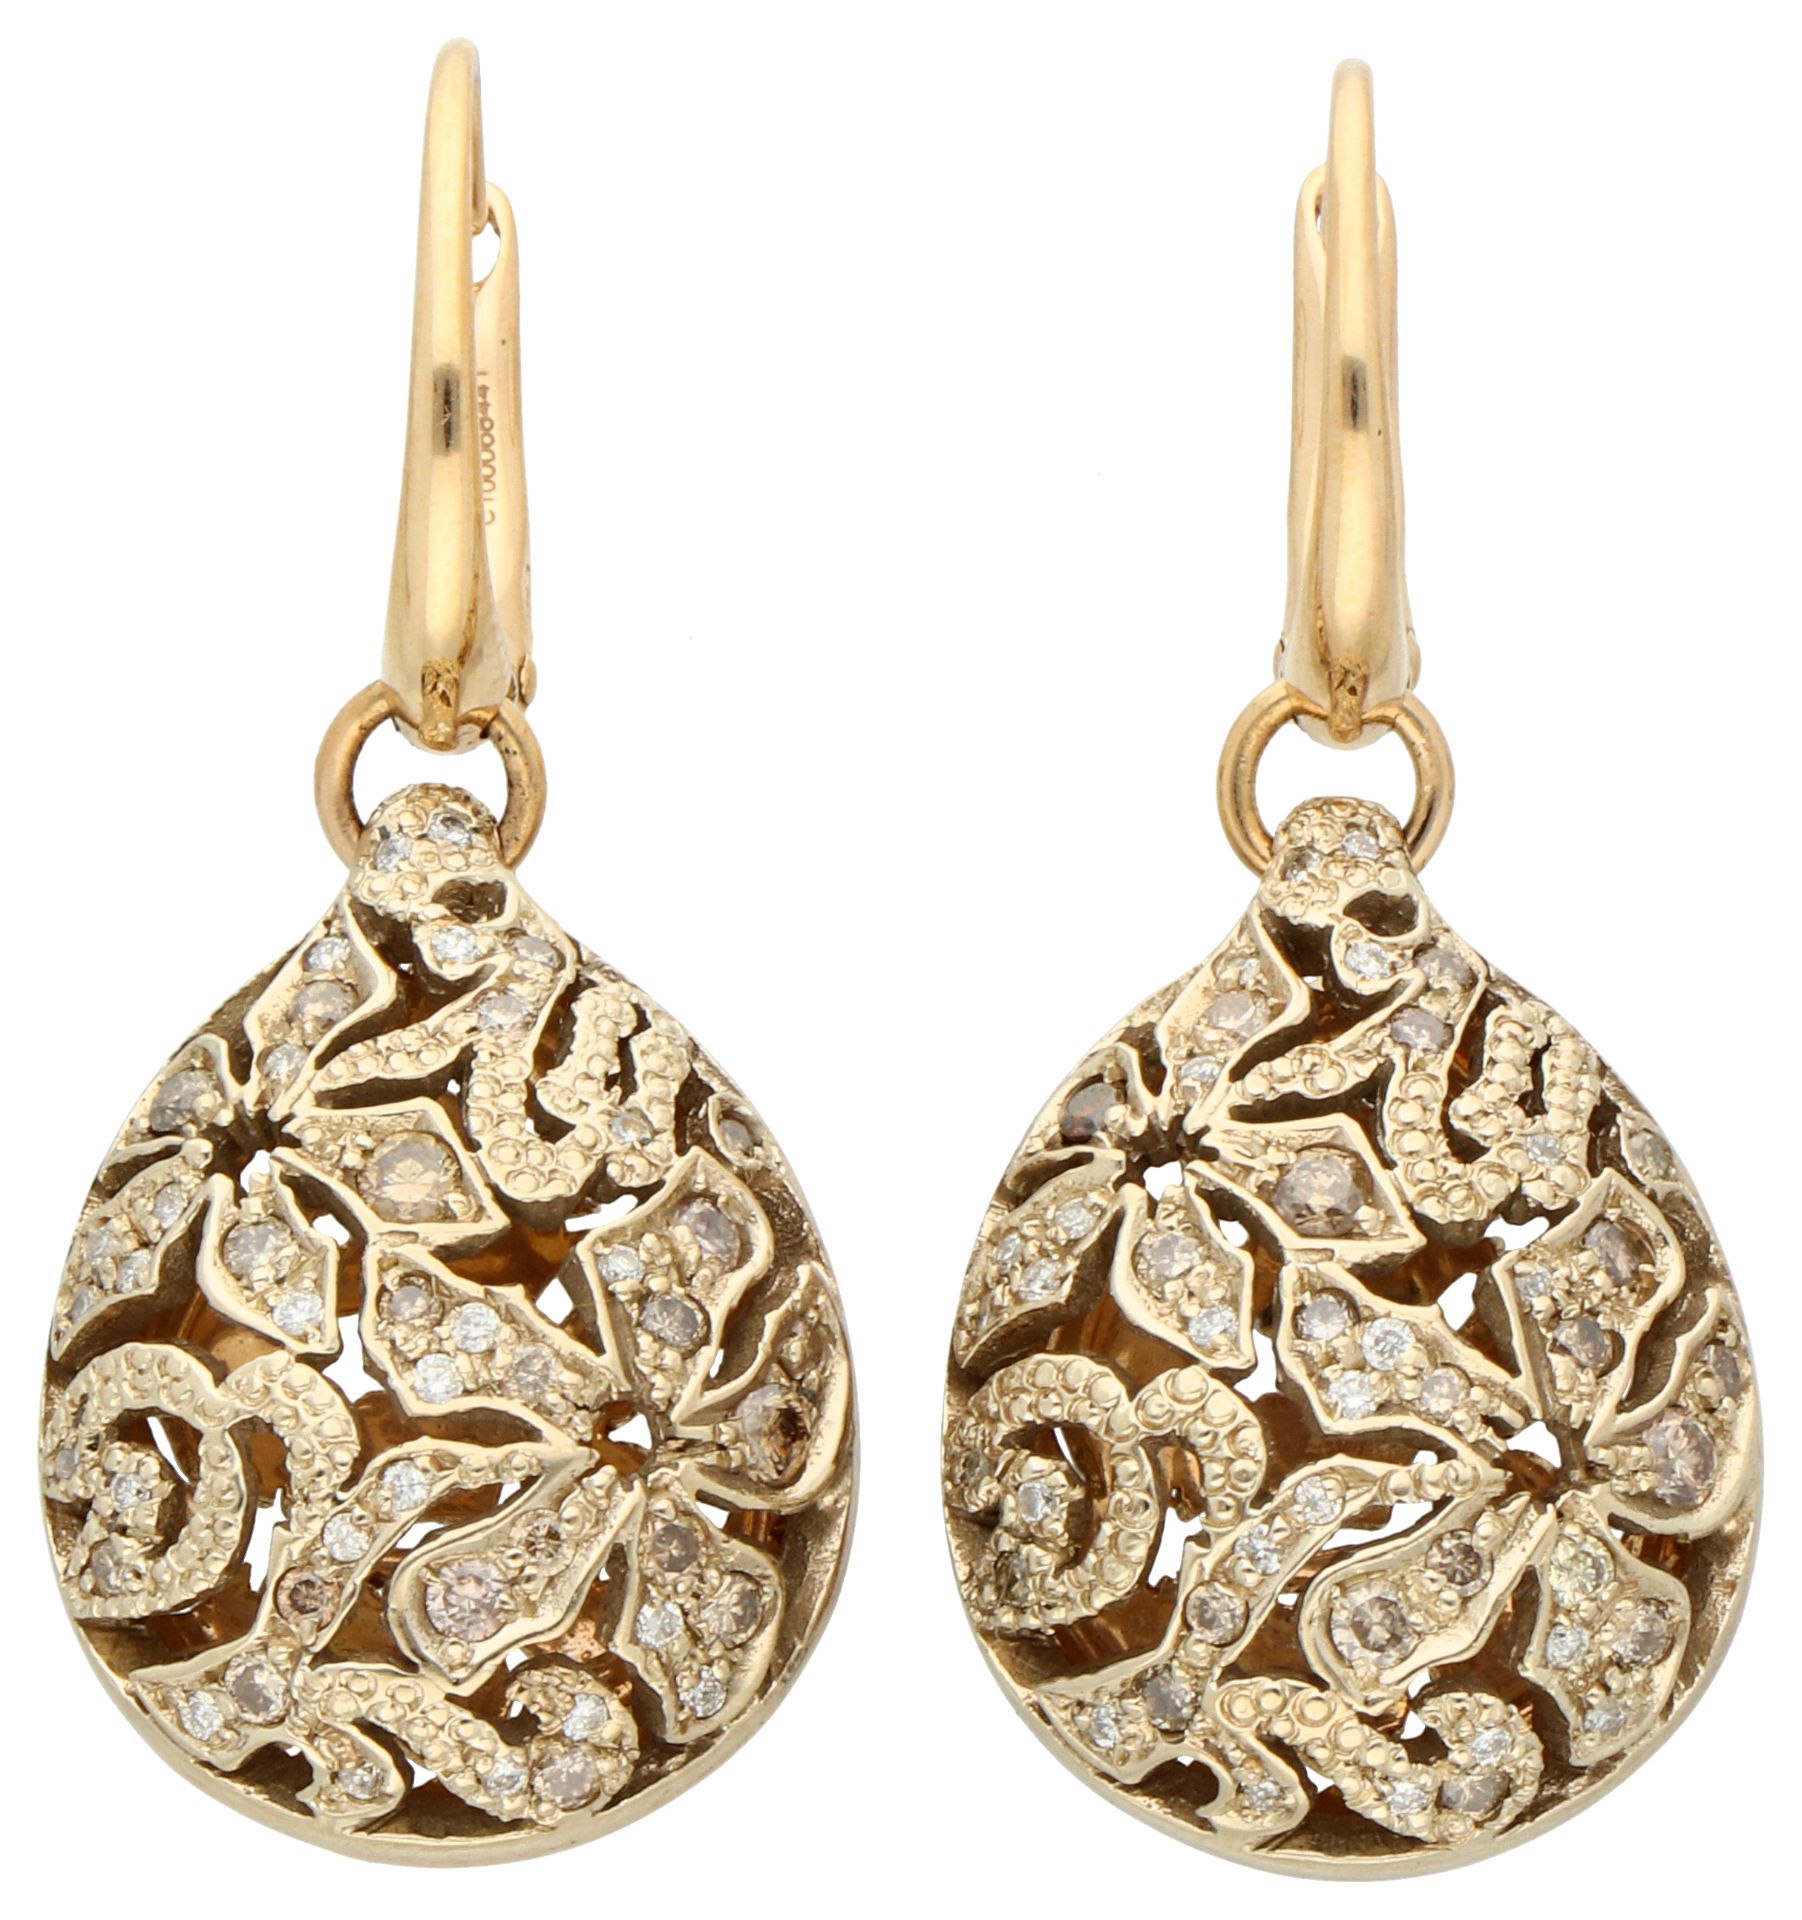 No Reserve - Pomellato 18K yellow gold Arabesque earrings with diamonds.